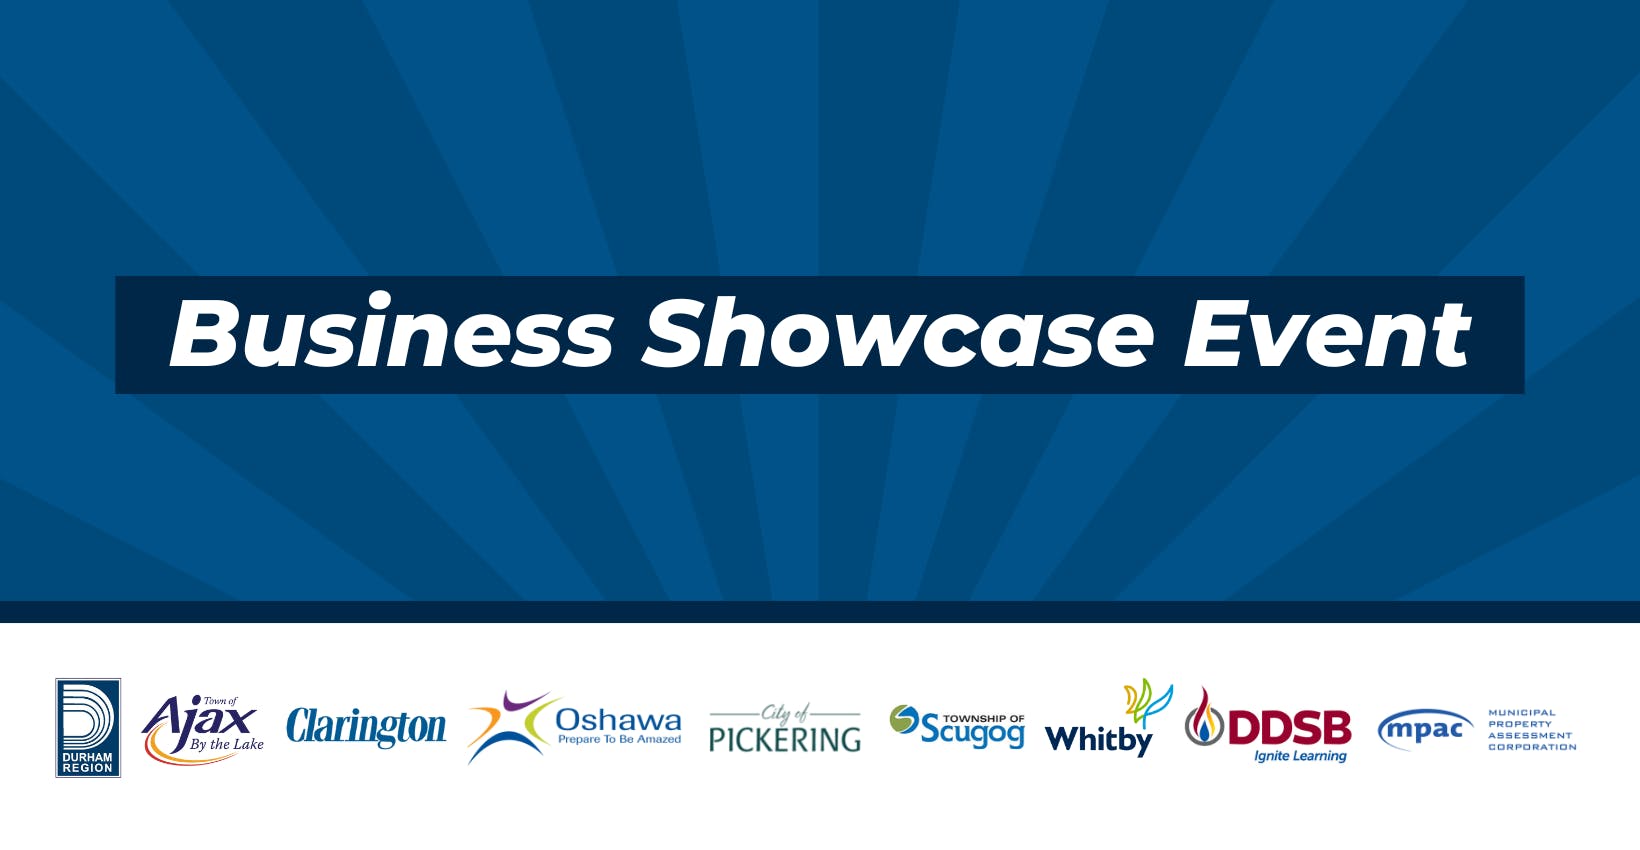 "Business Showcase Event" with Durham, Ajax, Clarington, Oshawa, Pickering, Scugog, Whitby, DDSB and MPAC logos